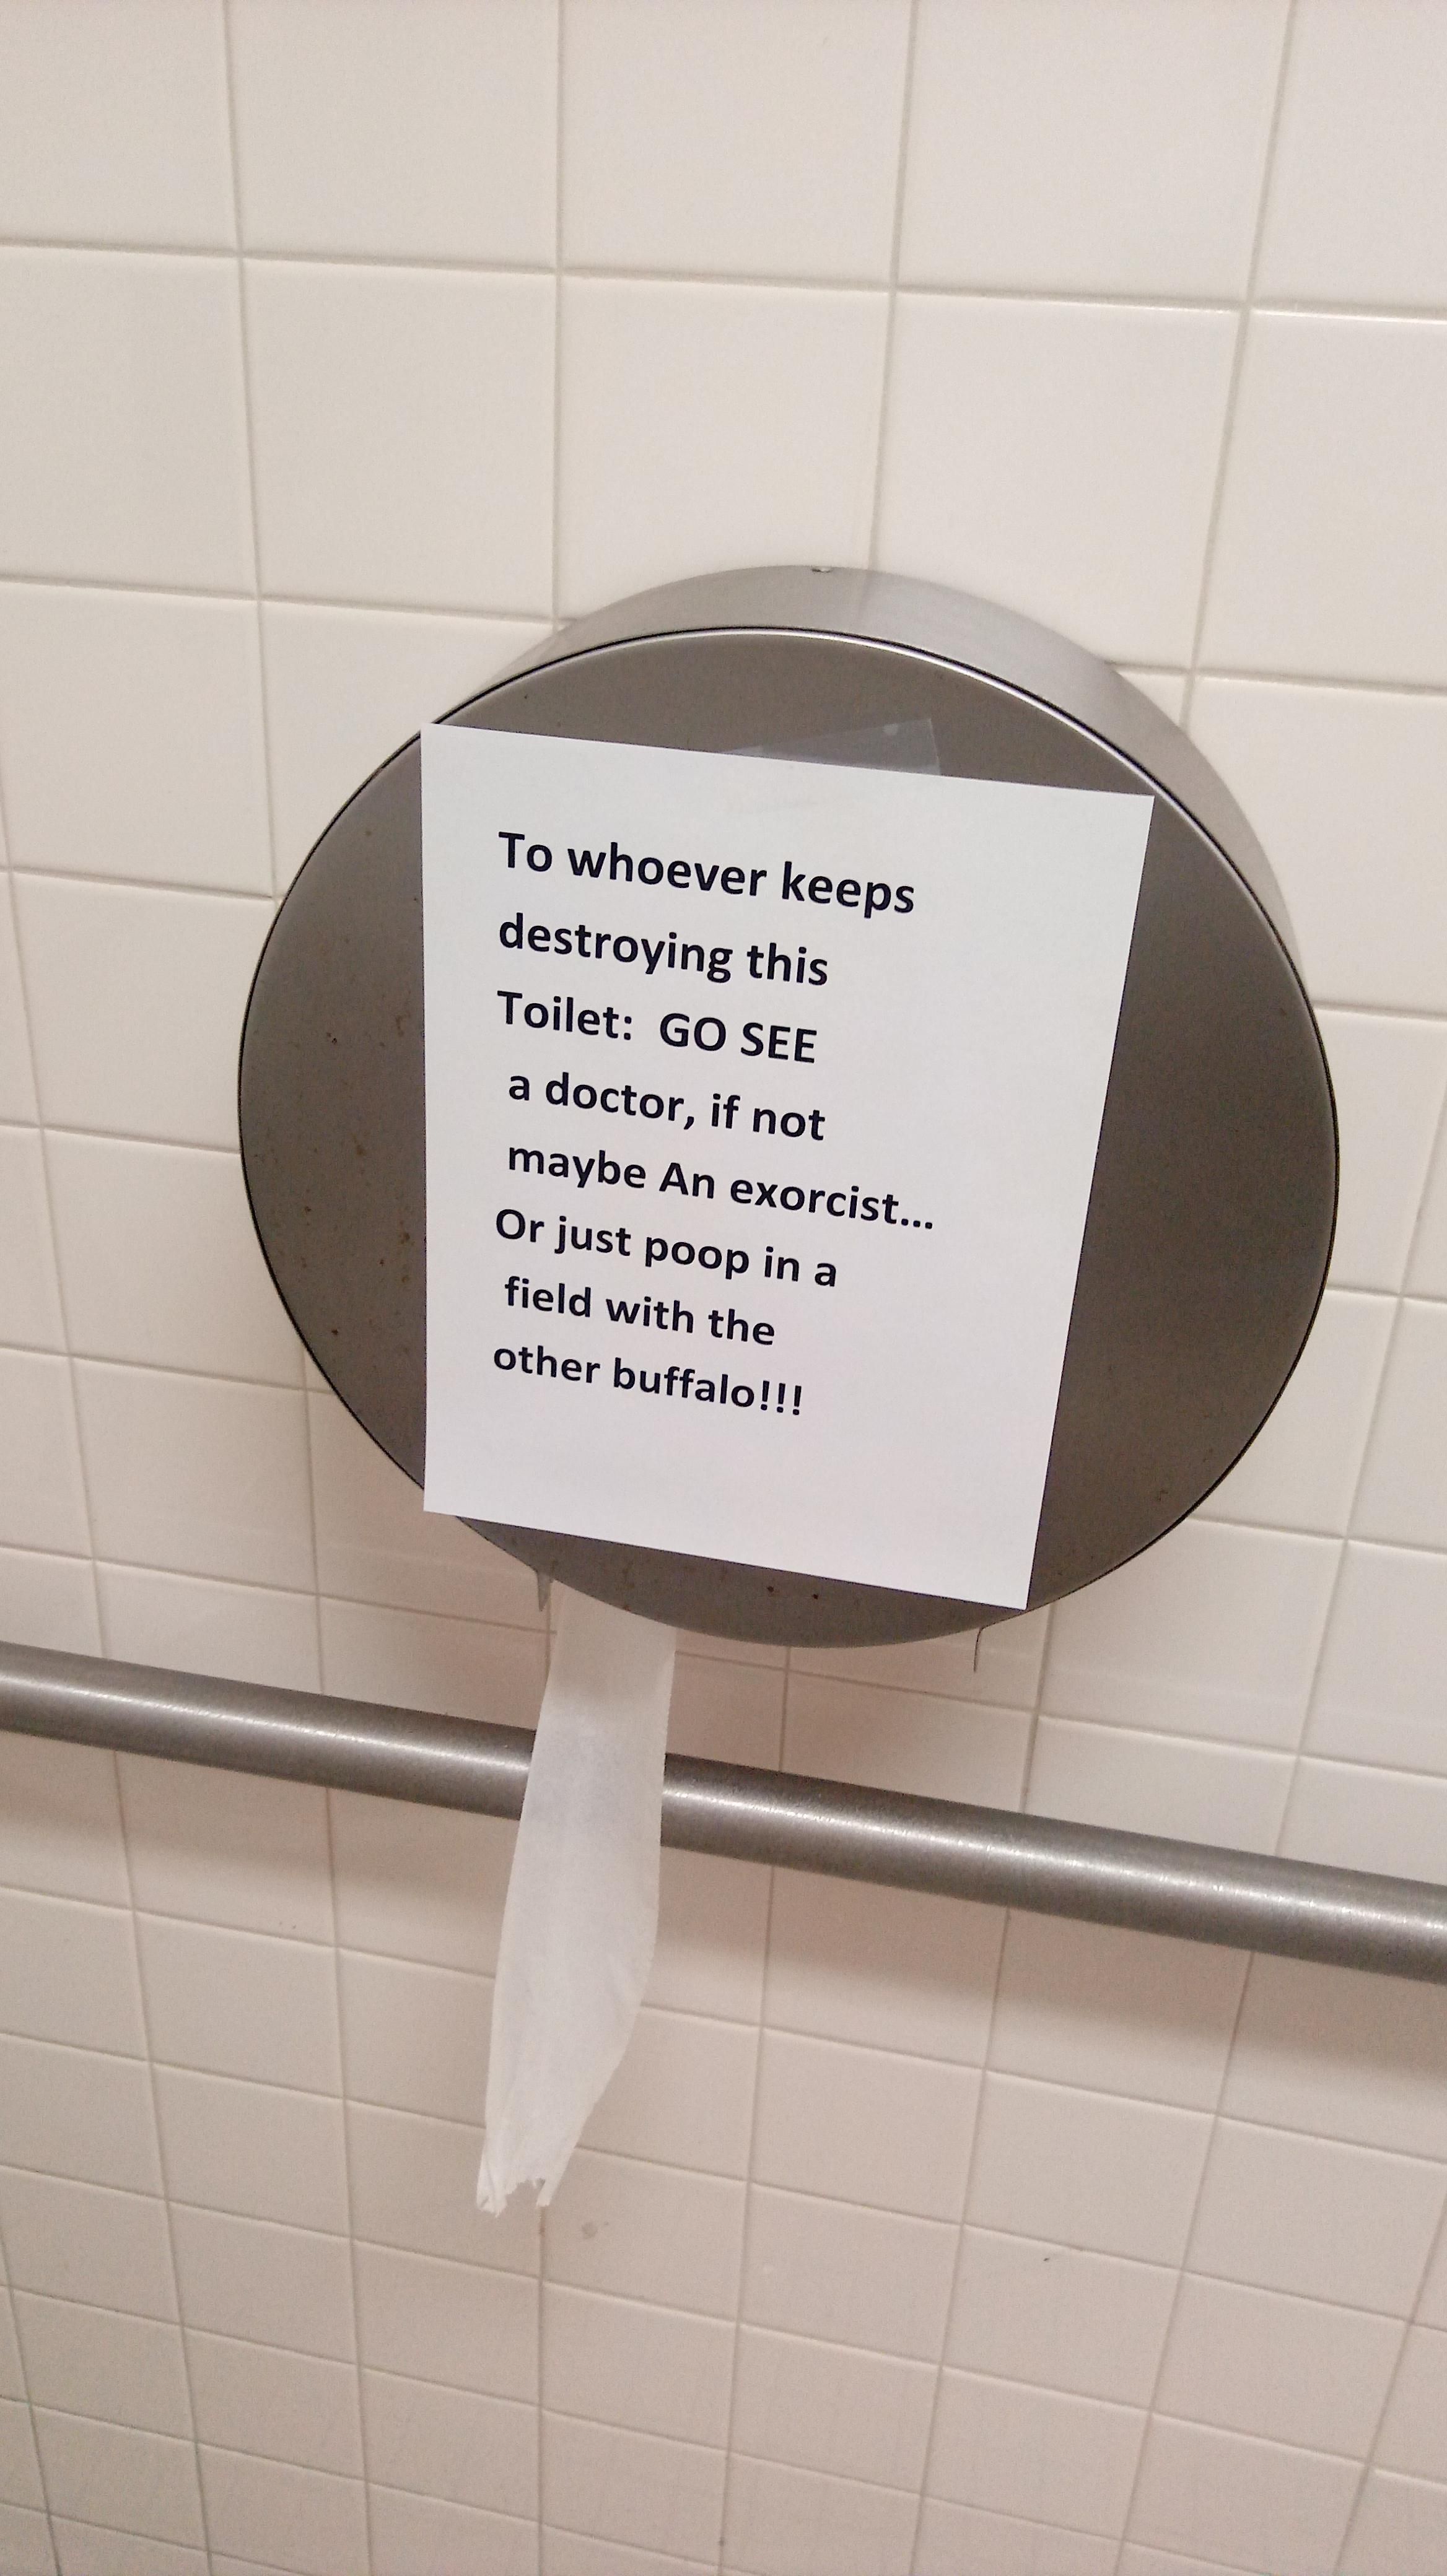 The teachers lounge bathroom is getting savage.